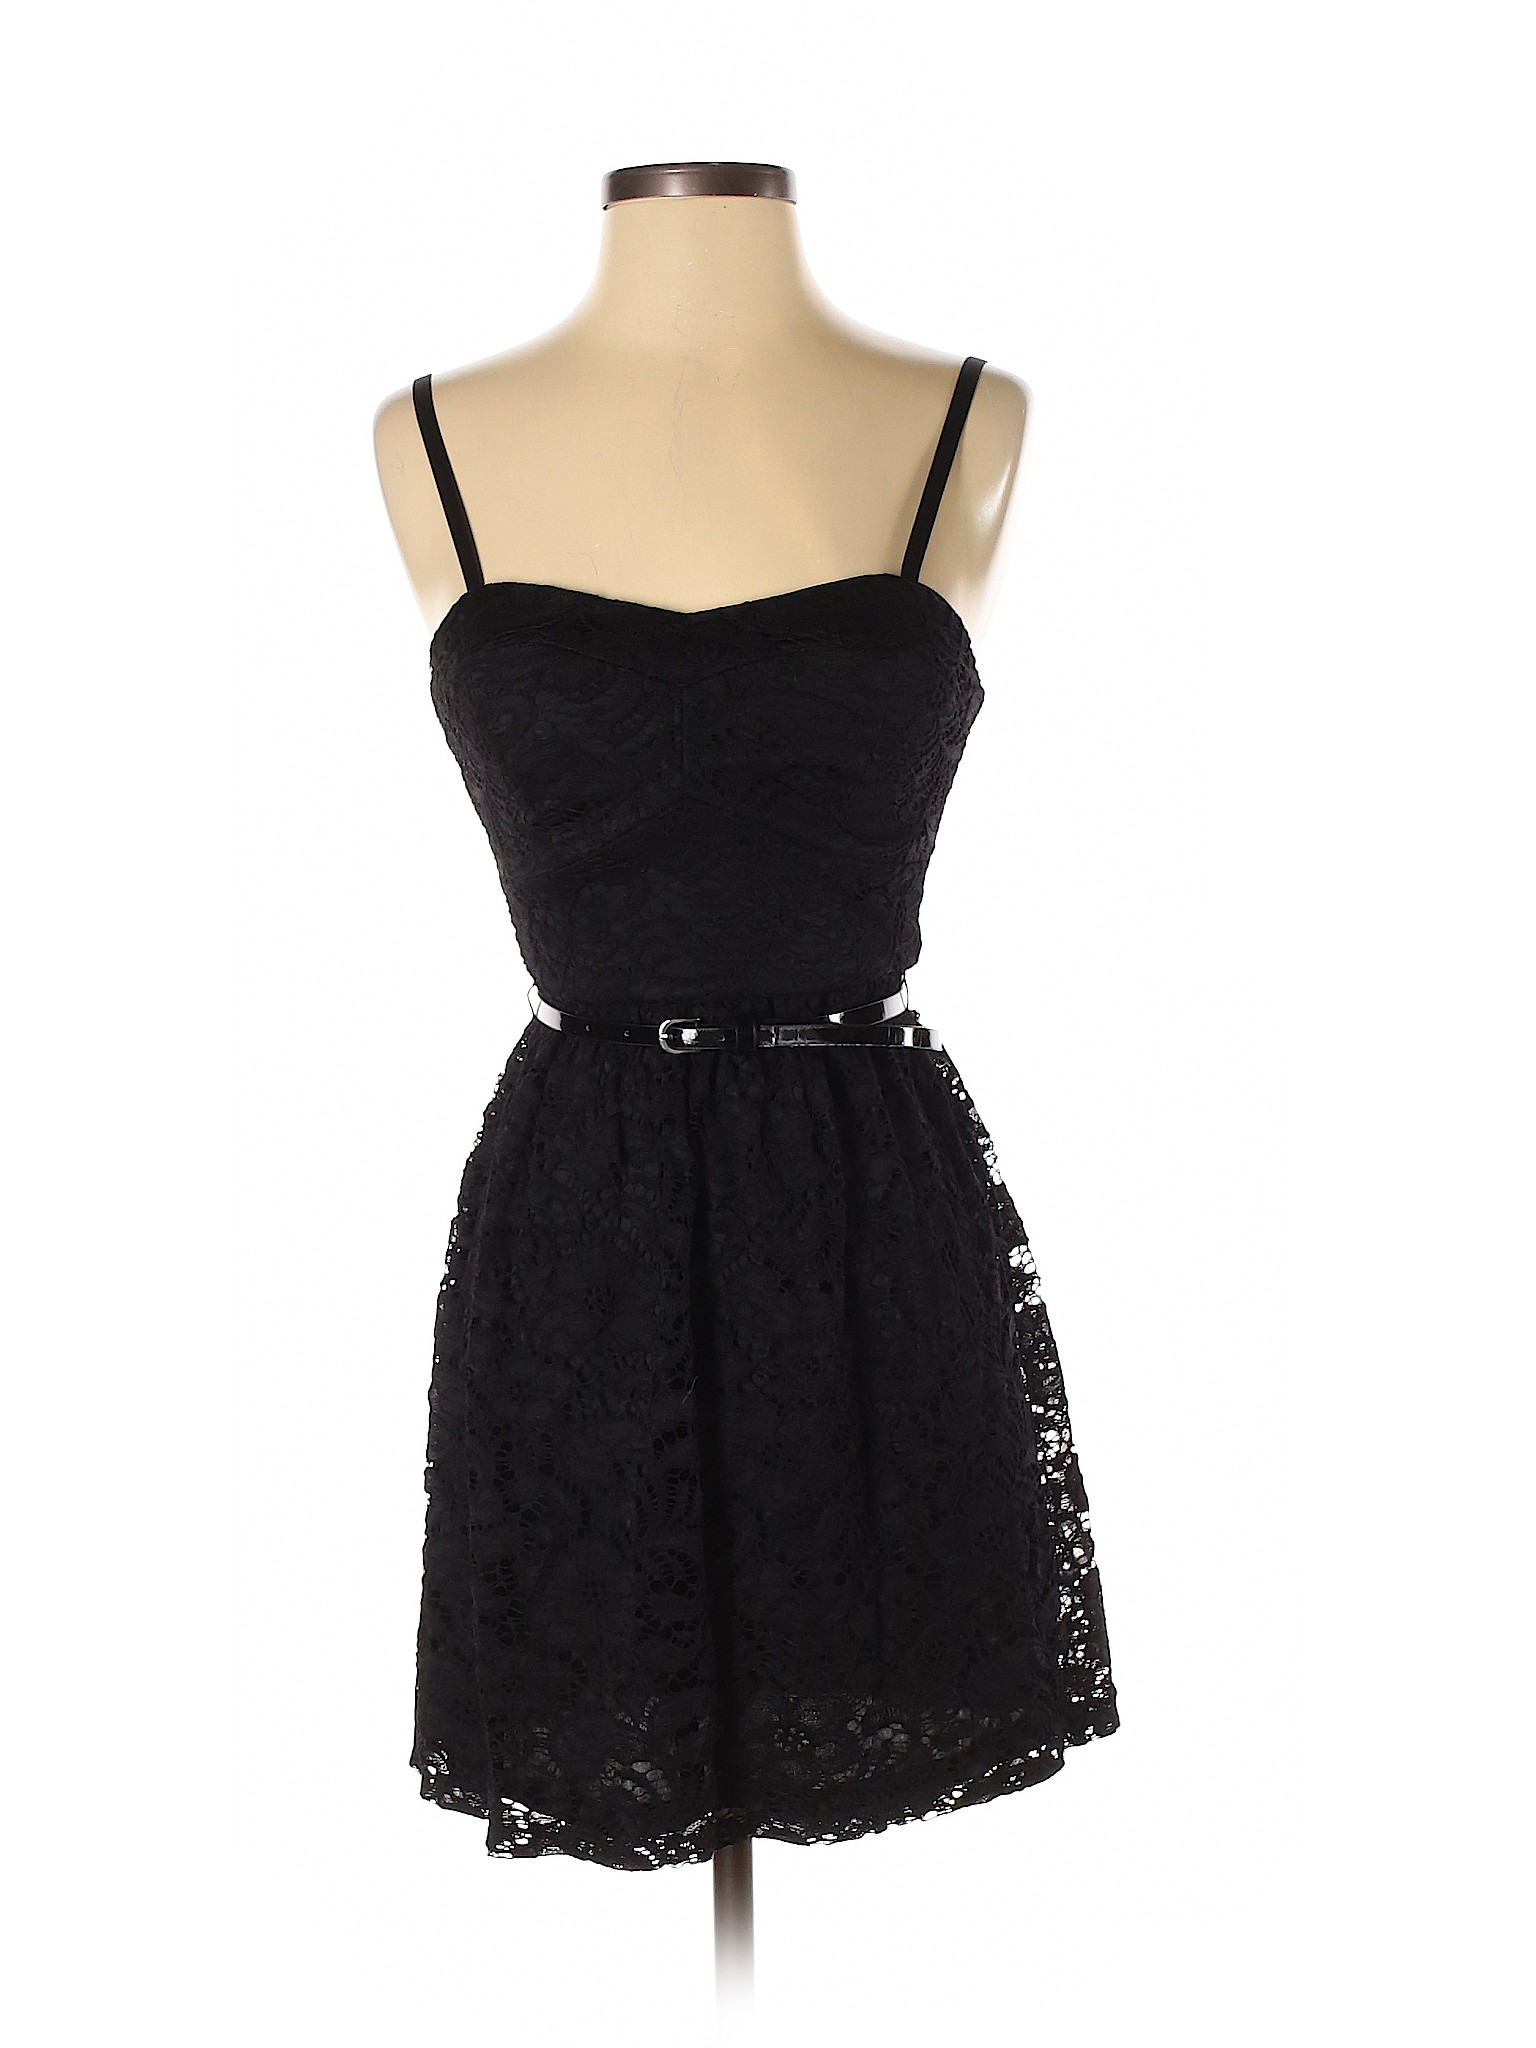 NWT Kohl's Women Black Casual Dress XS | eBay